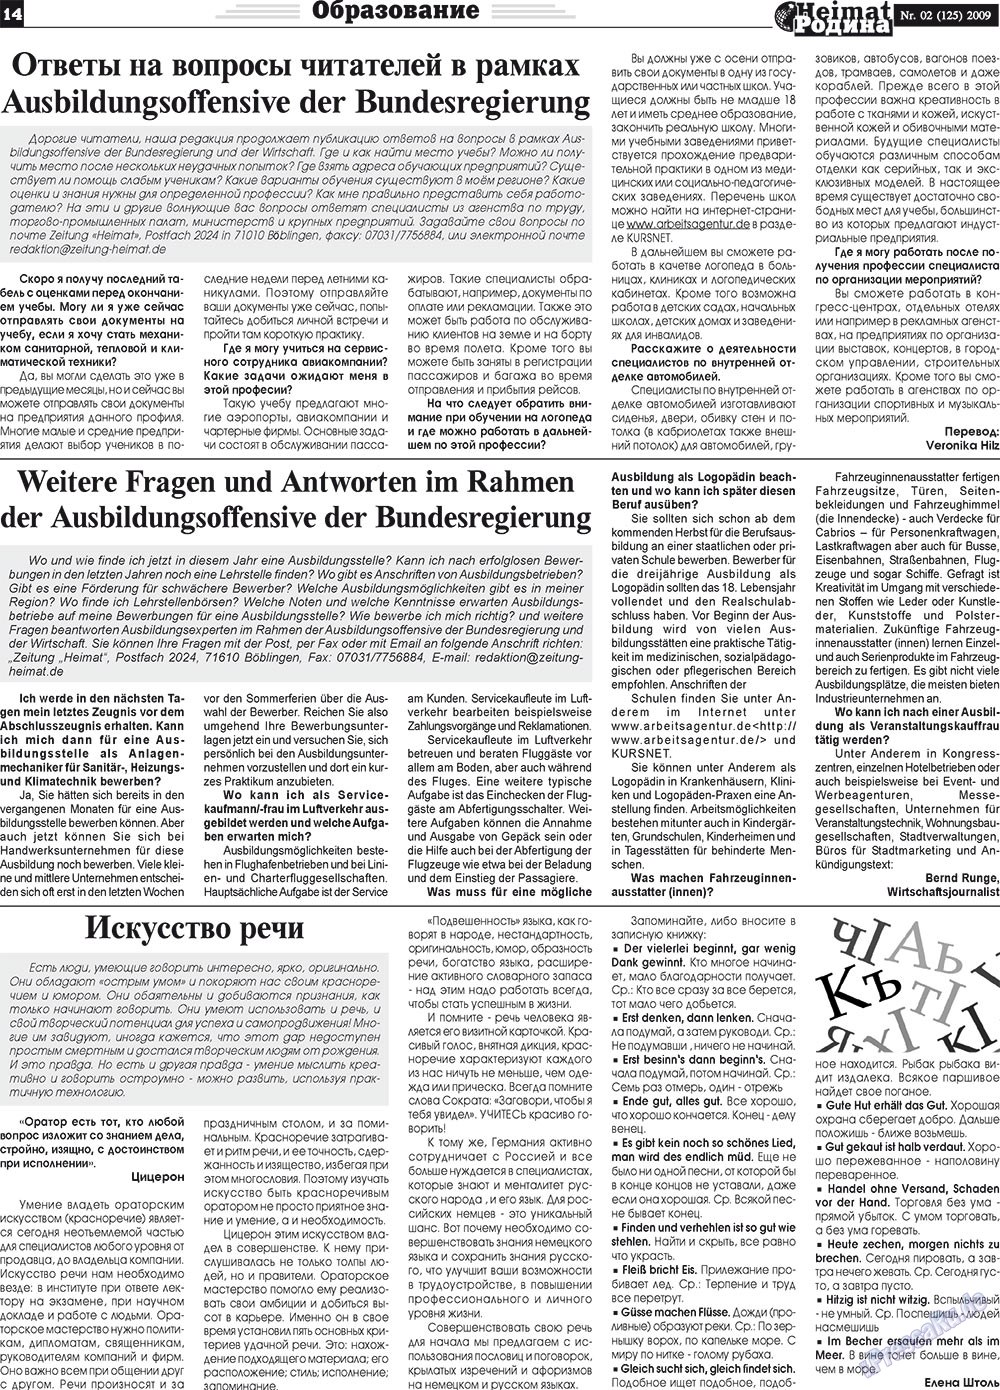 Heimat-Родина, газета. 2009 №2 стр.14